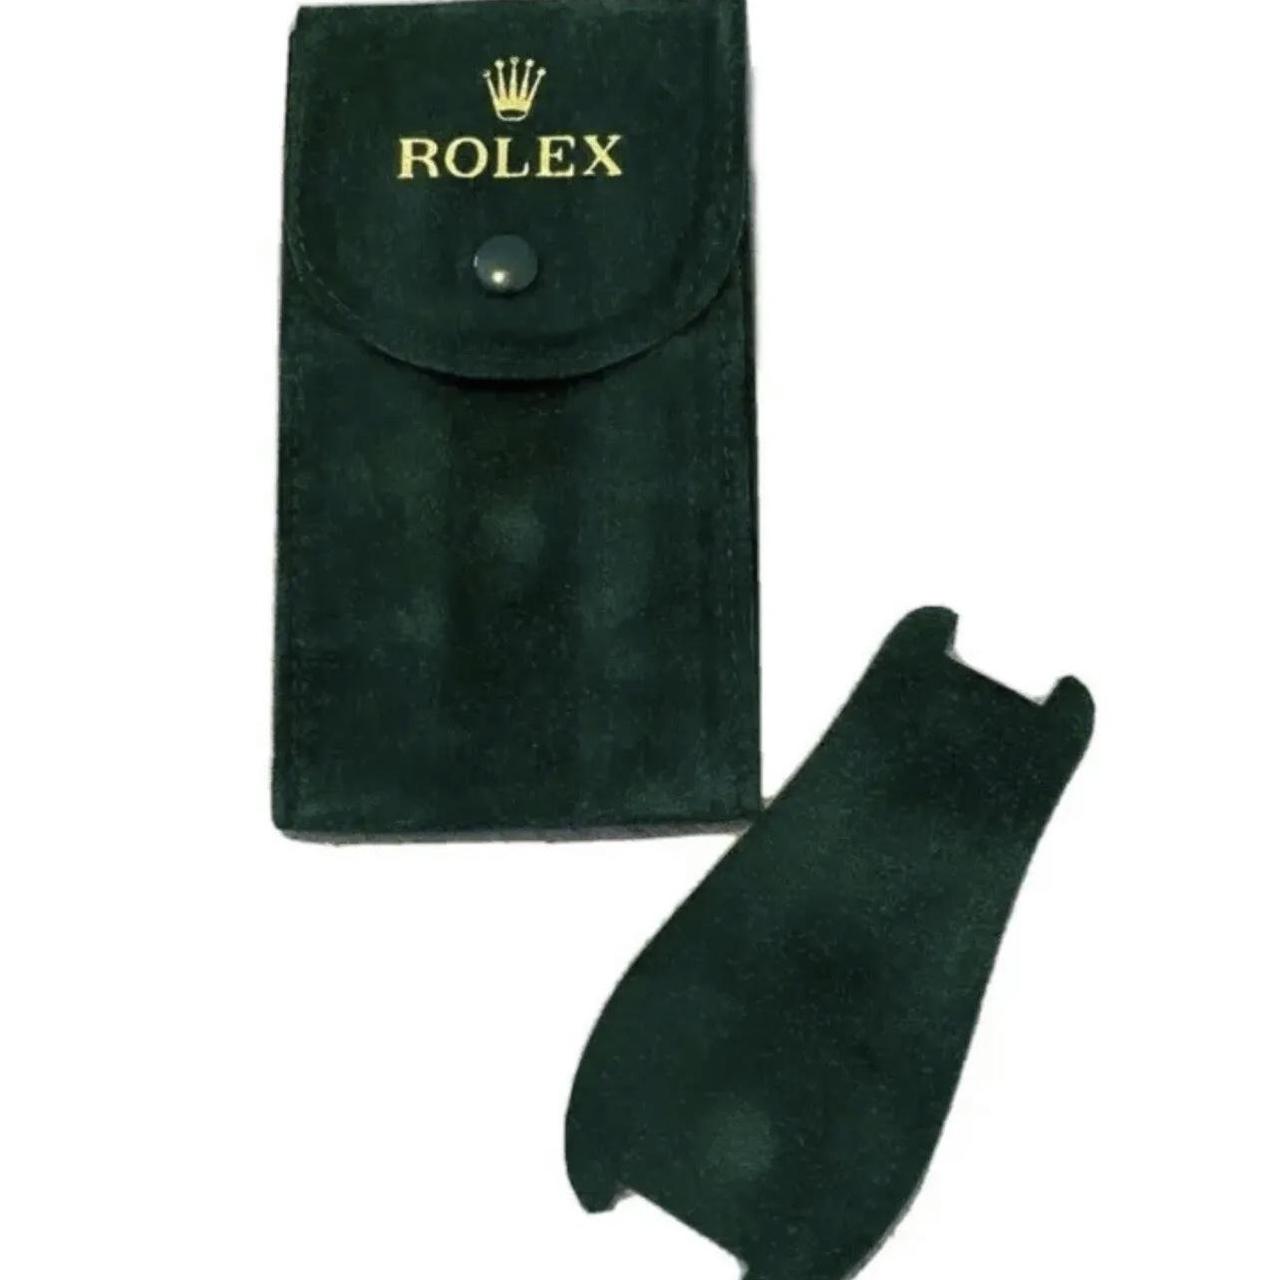 Rolex Men's Green Watch